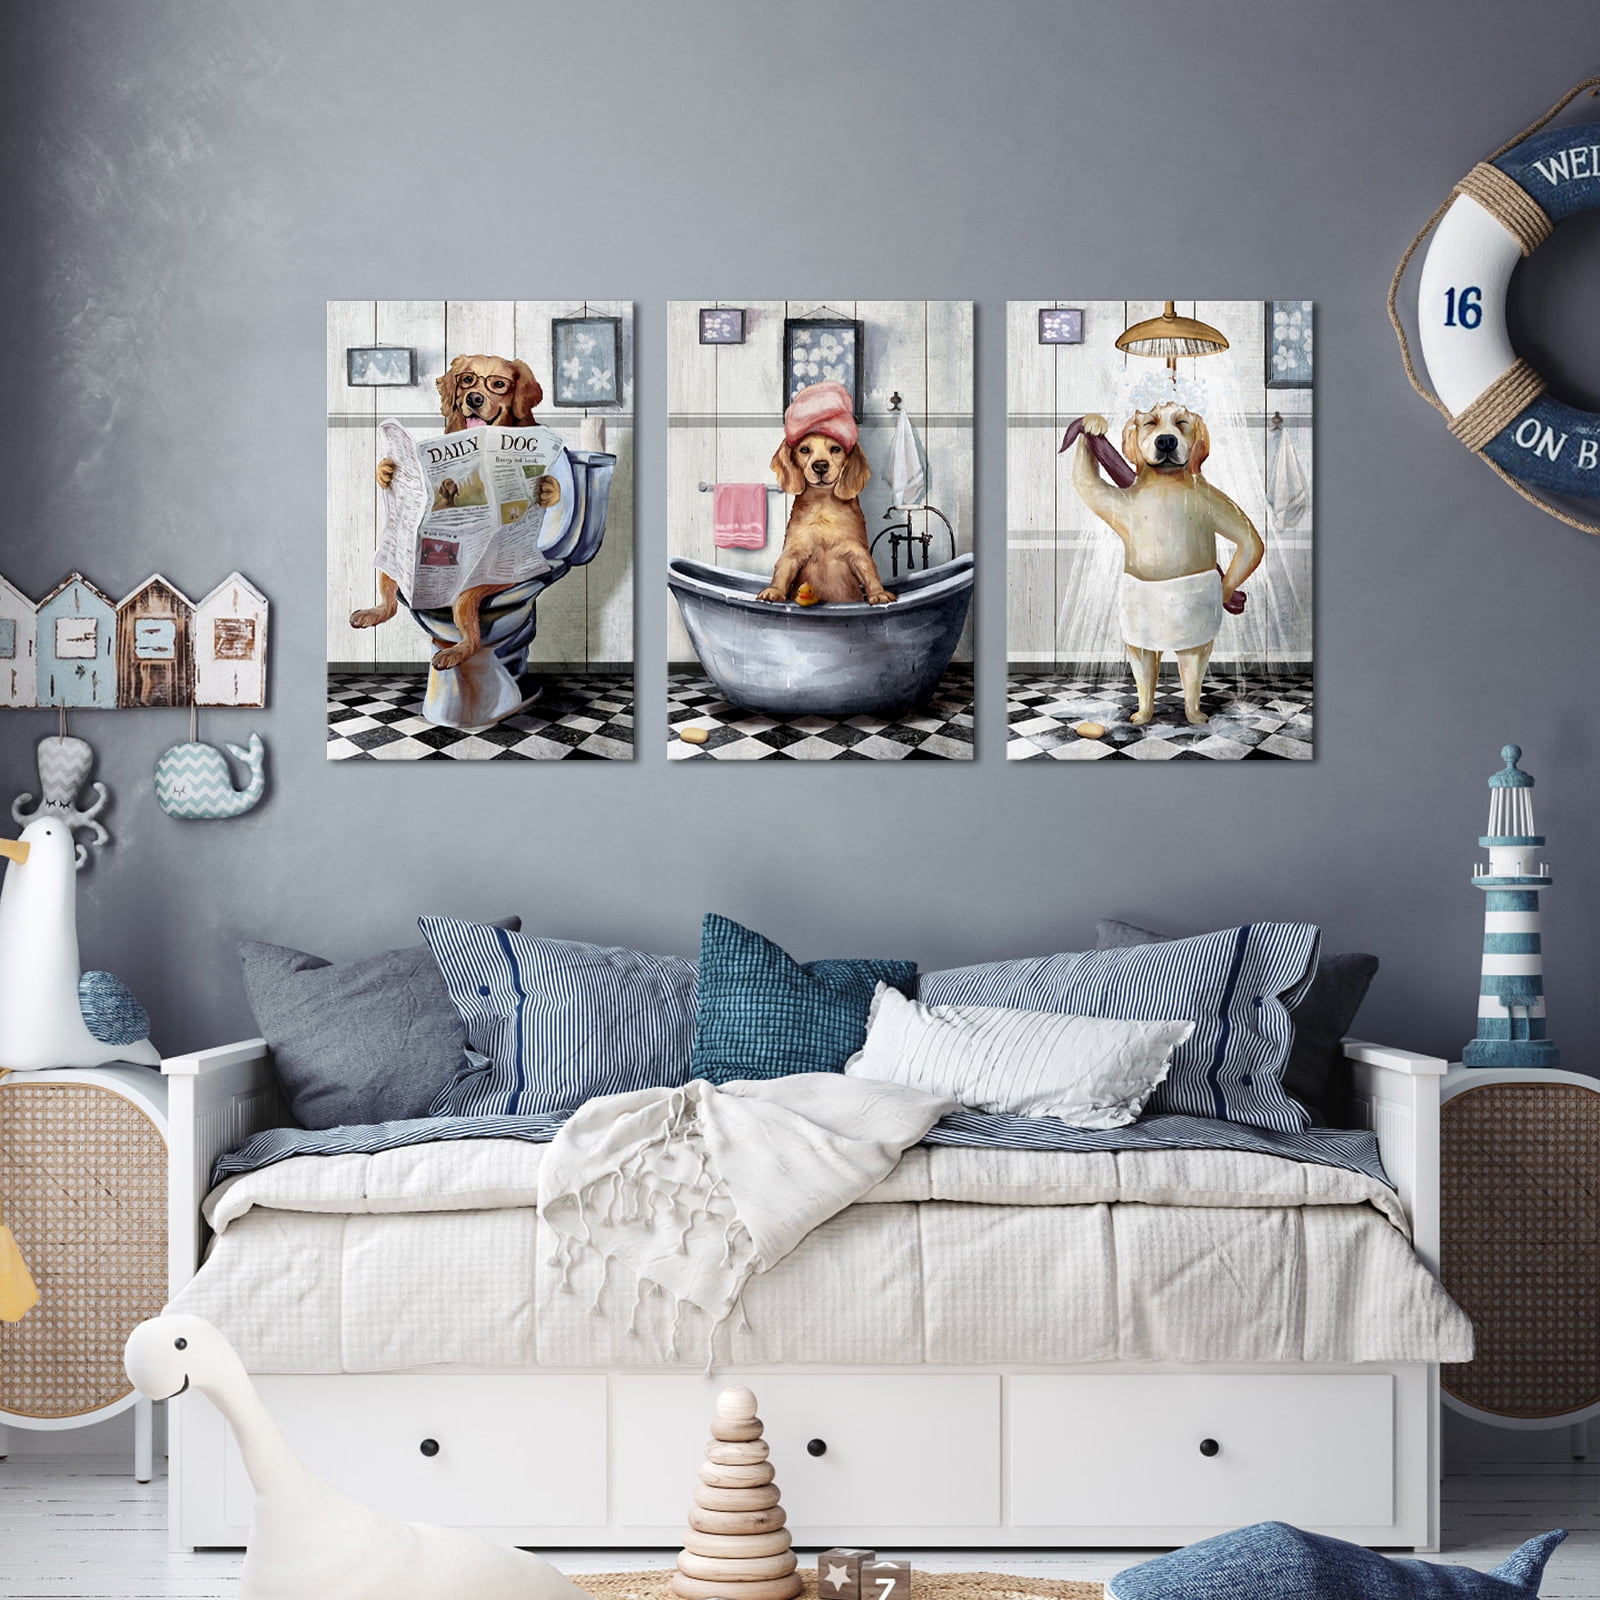 Guy Fieri Fabric, Wallpaper and Home Decor